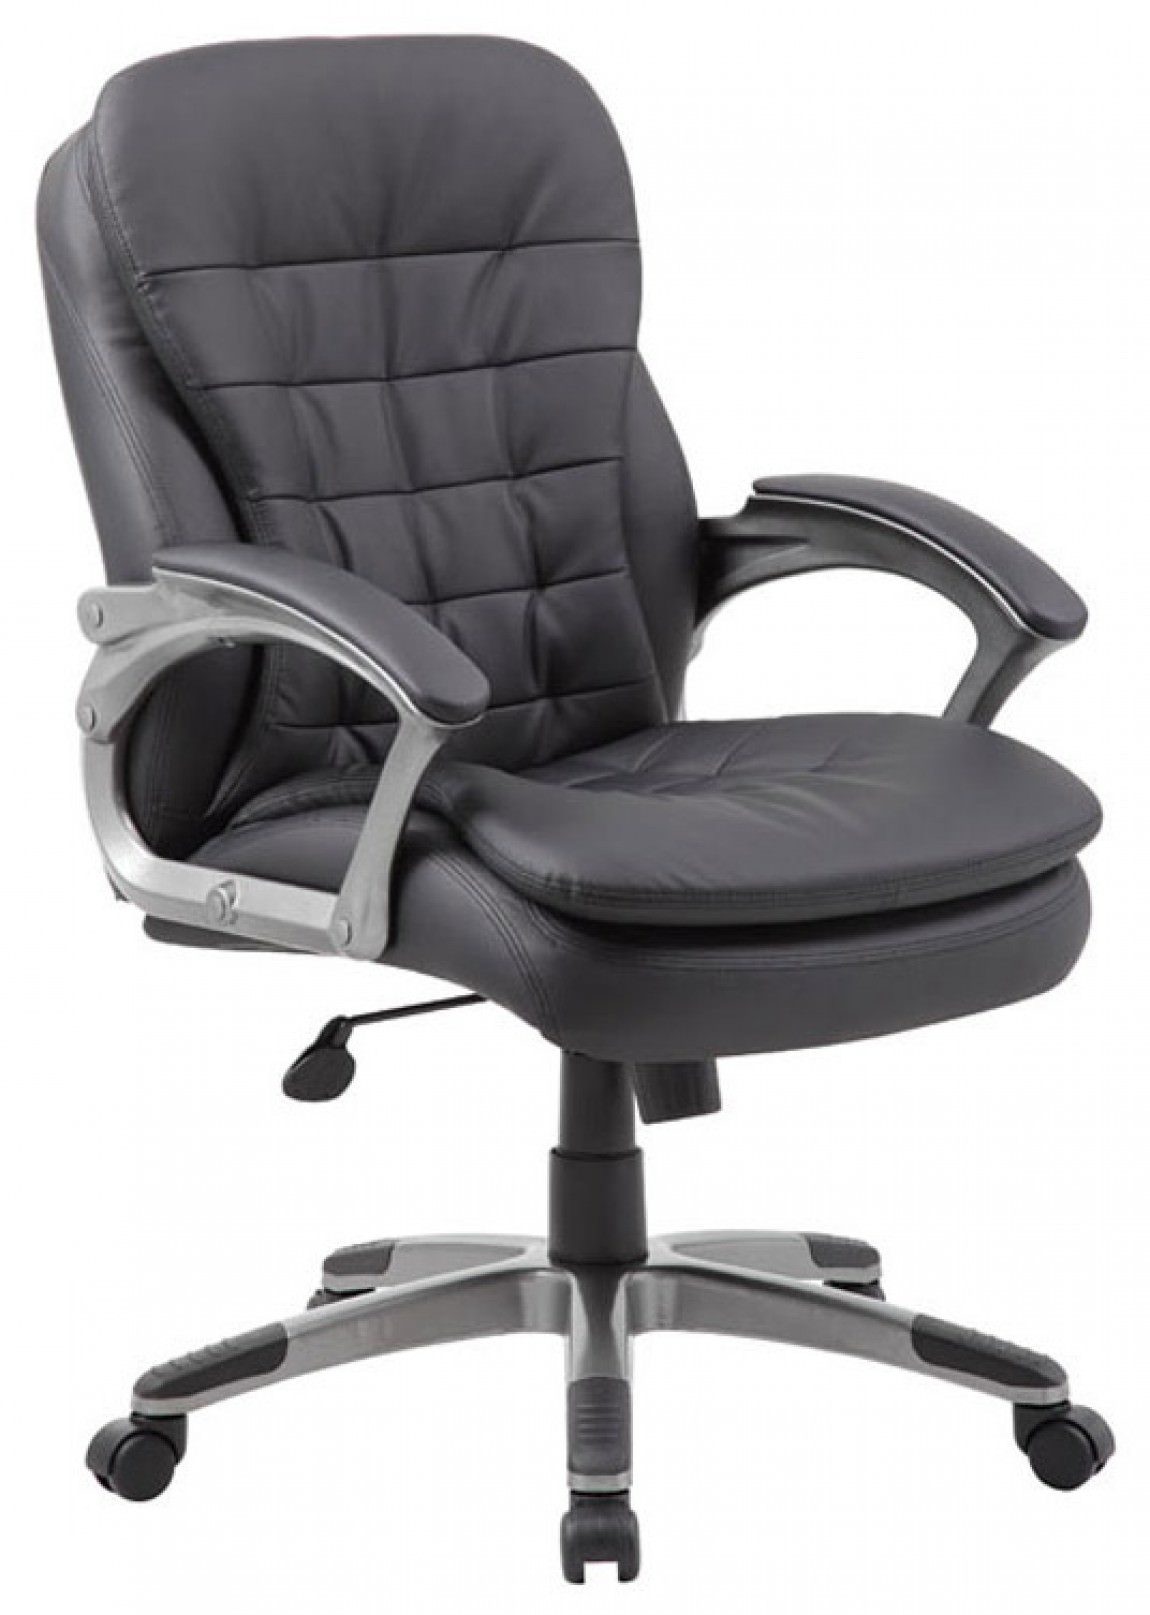 https://madisonliquidators.com/images/p/1150/19359-executive-mid-back-office-chair-1.jpg